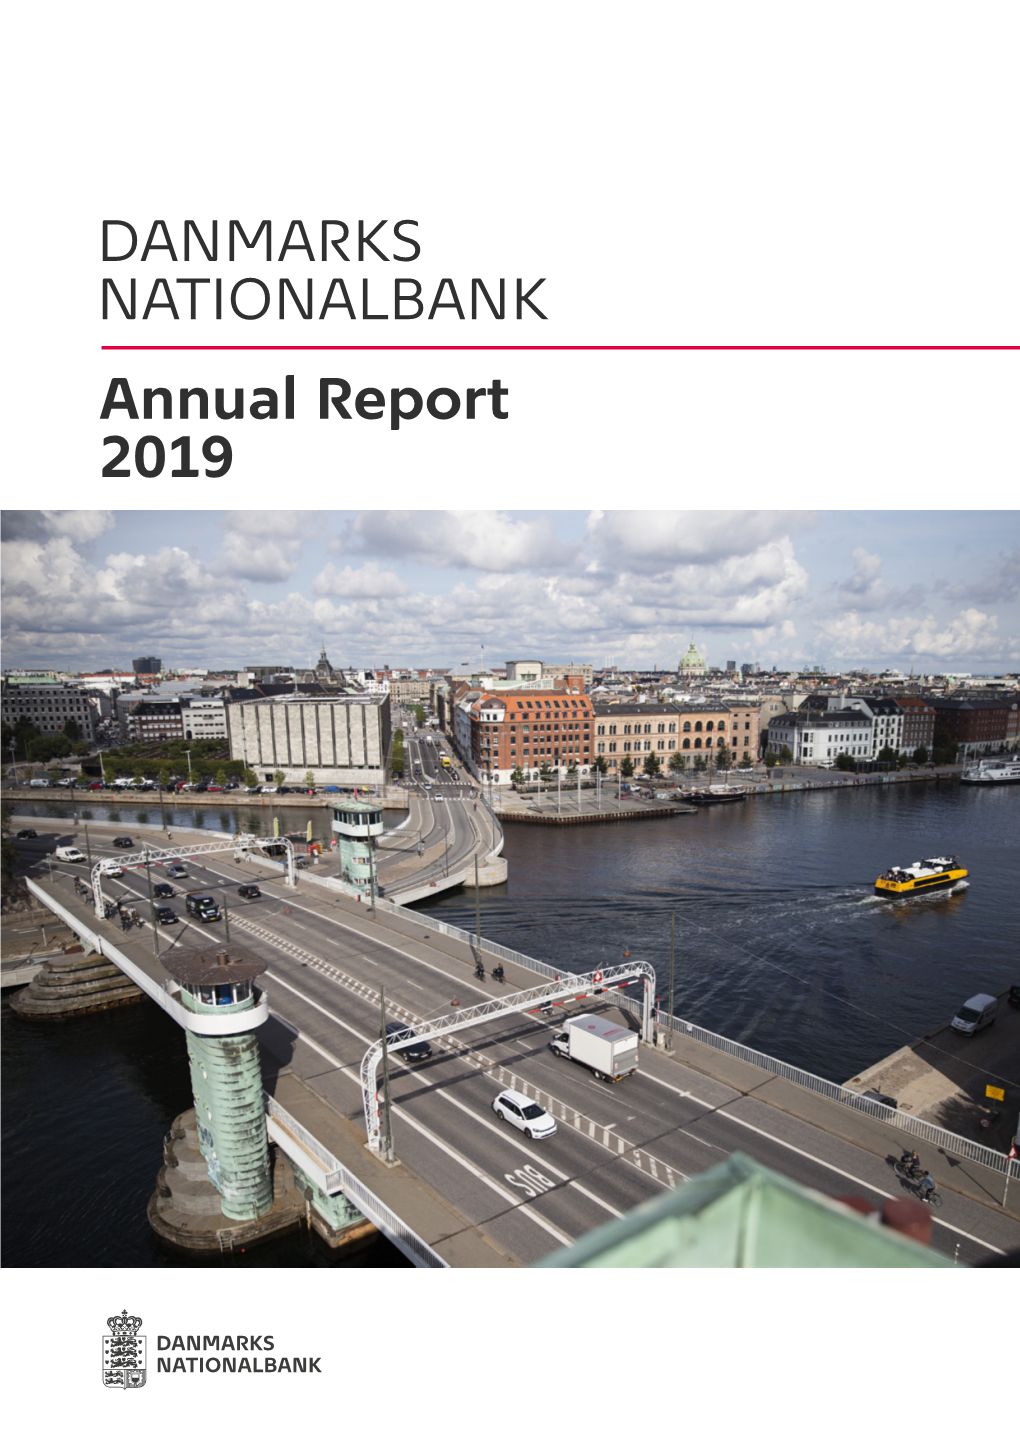 DANMARKS NATIONALBANK Annual Report 2019